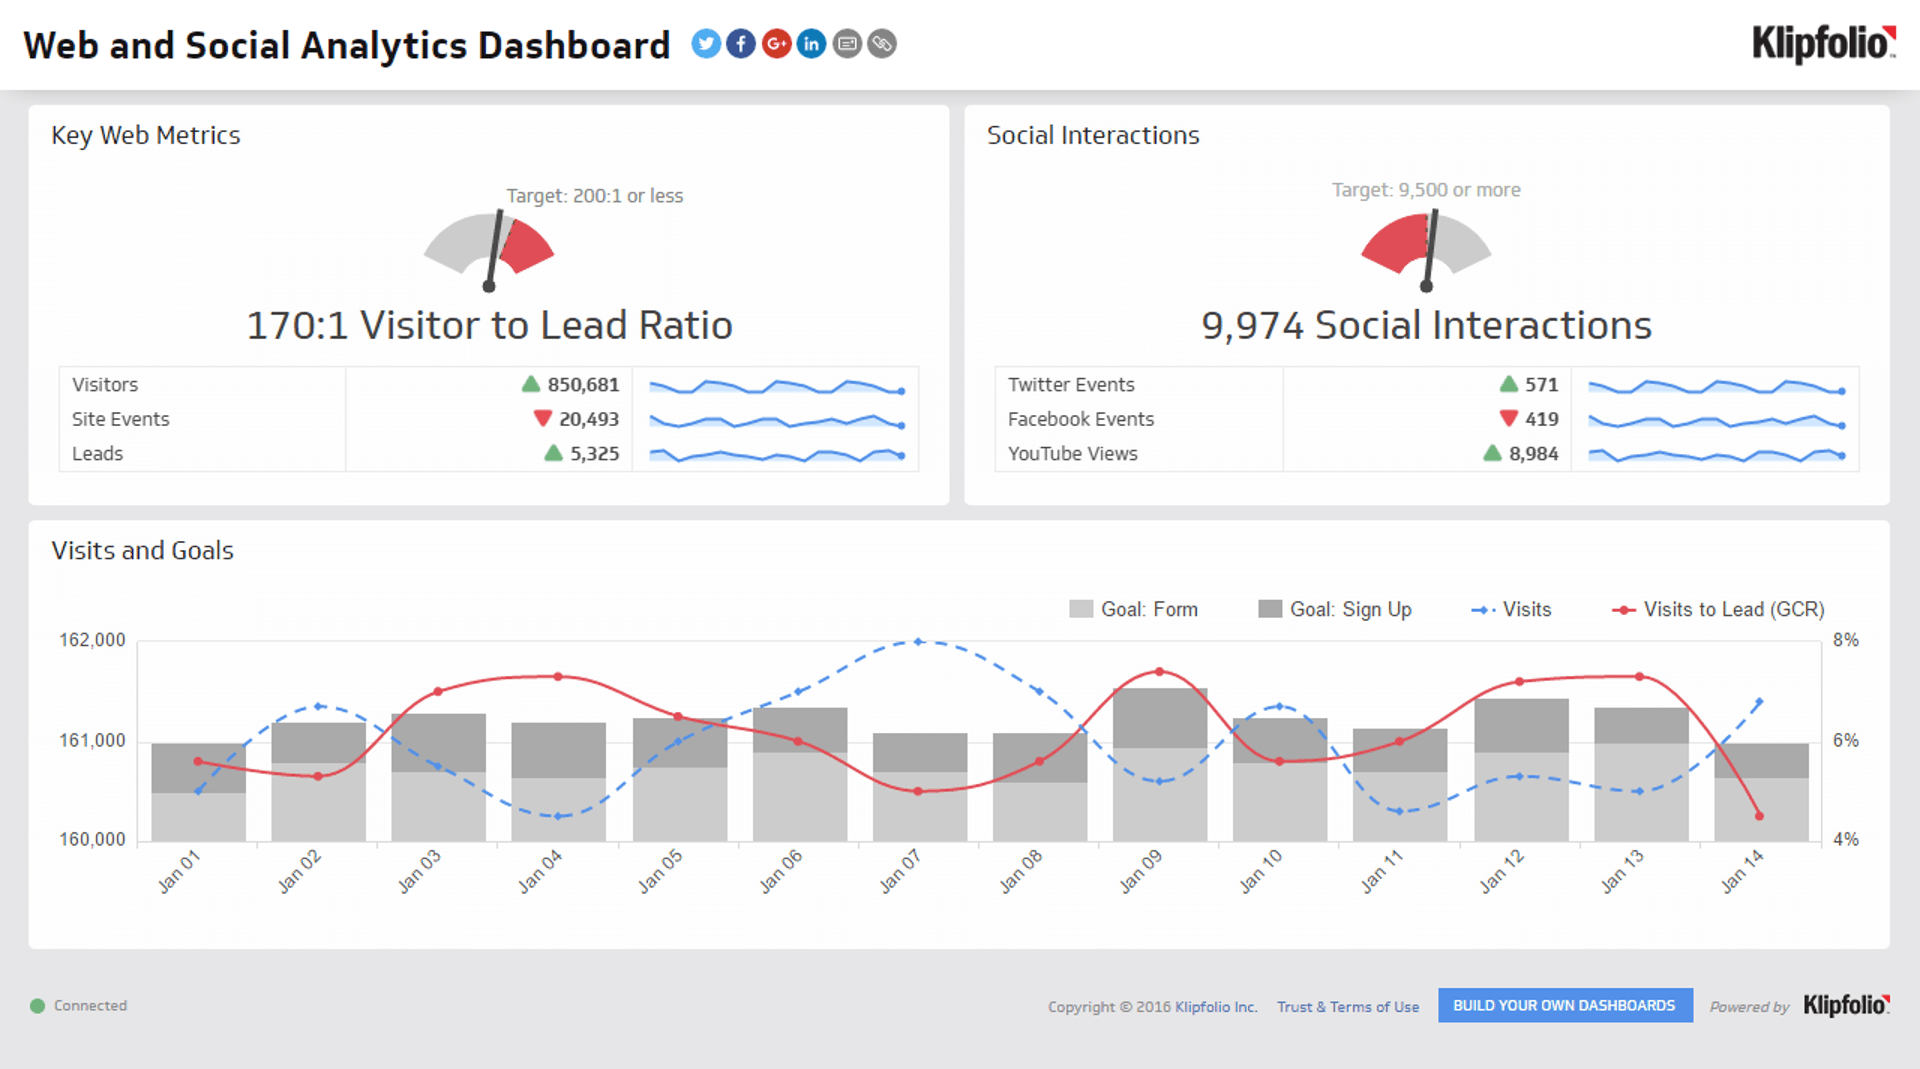 Marketing Dashboard Example - Web and Social Analytics Dashboard